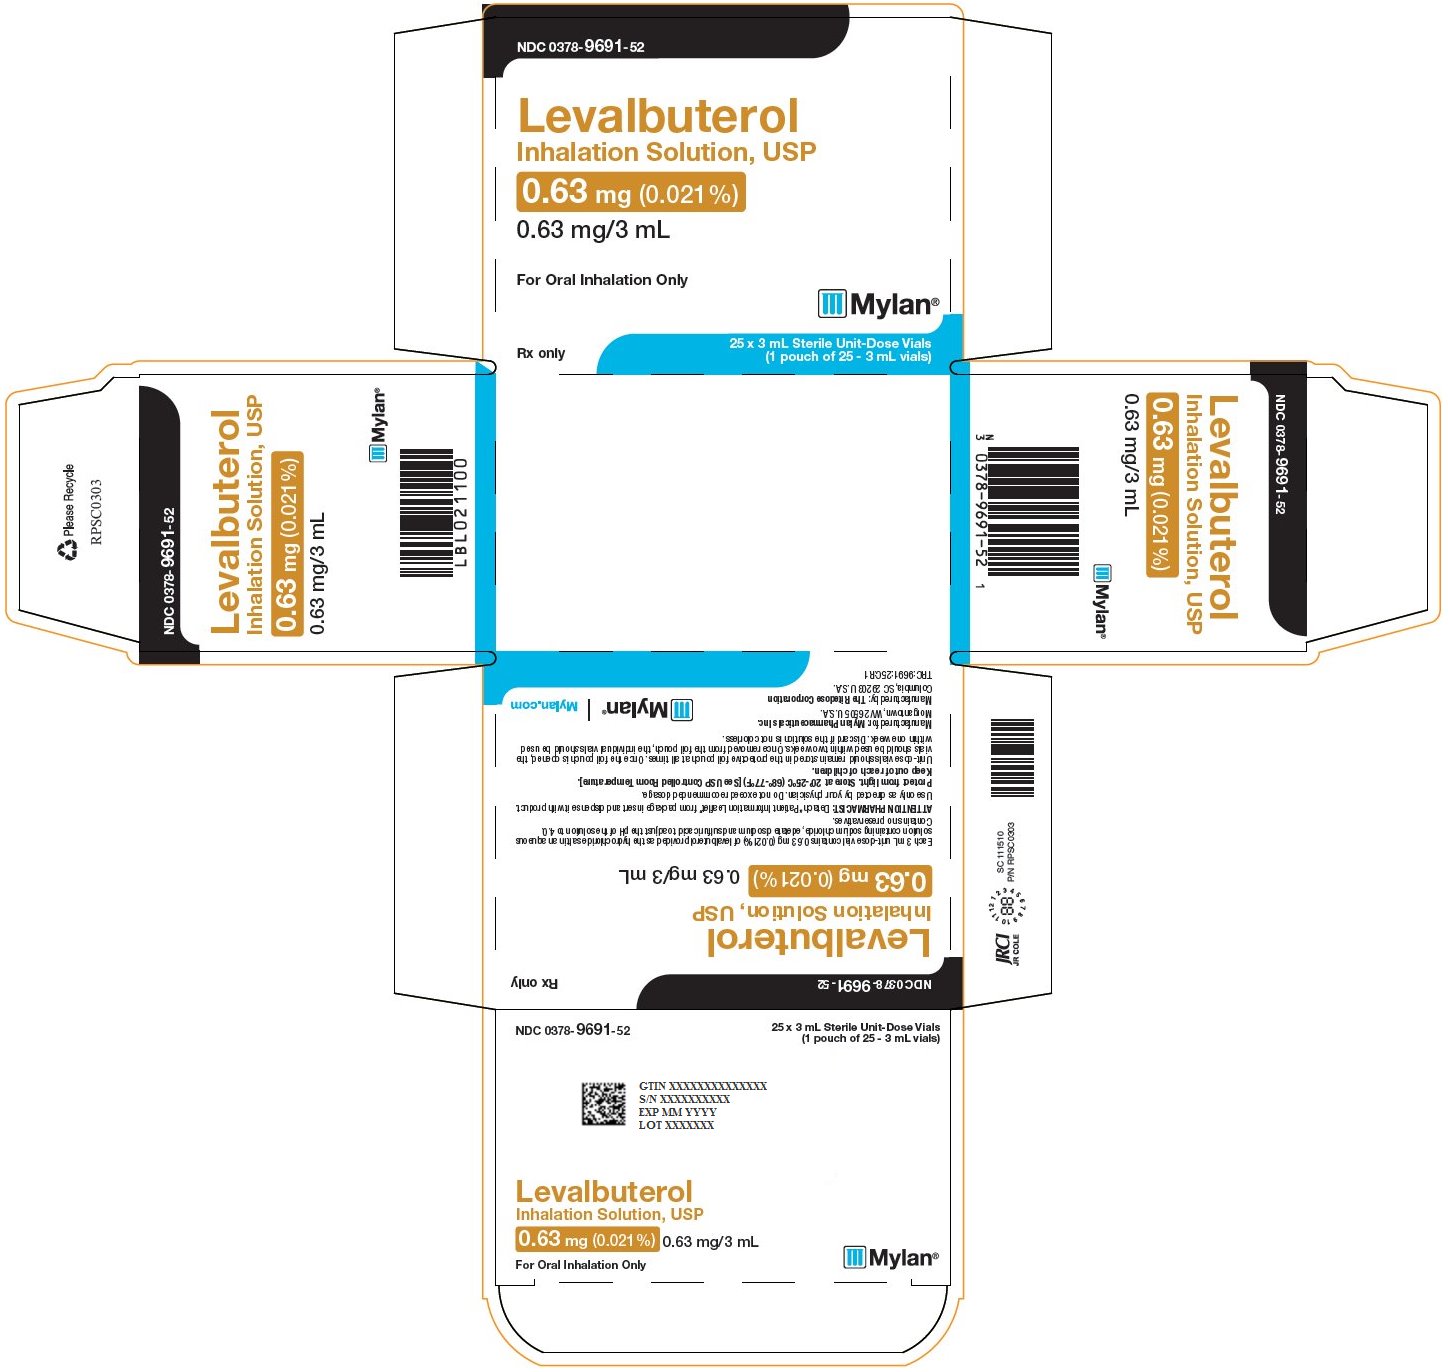 Levalbuterol Inhalation Solution 0.63 mg Carton Label